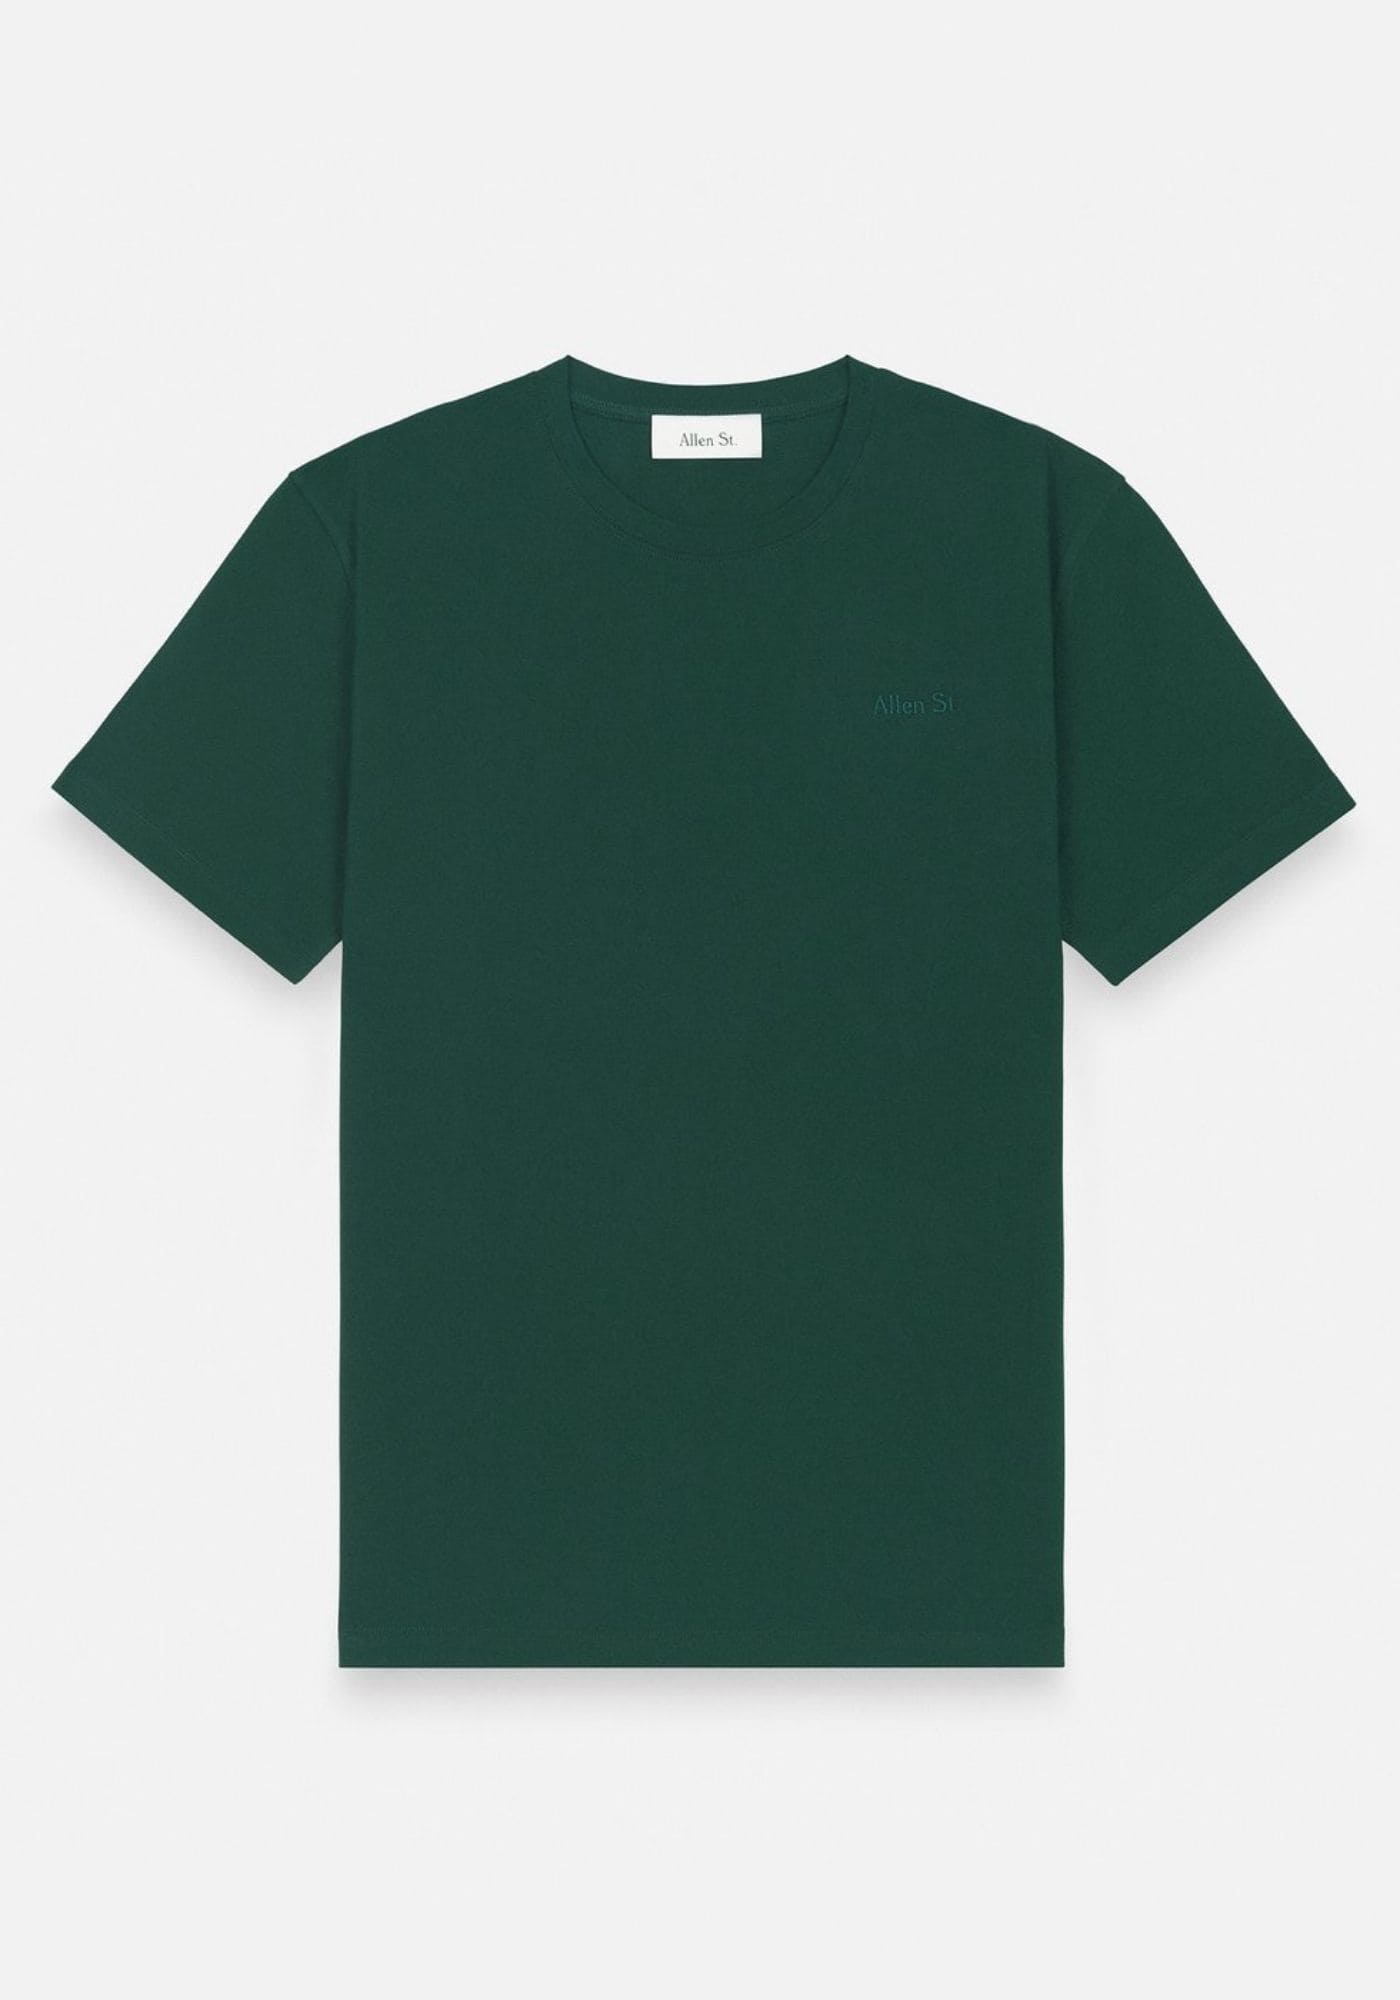 allen-st-t-shirt-uniforme-unisexe-chic-made-in-europe-vert